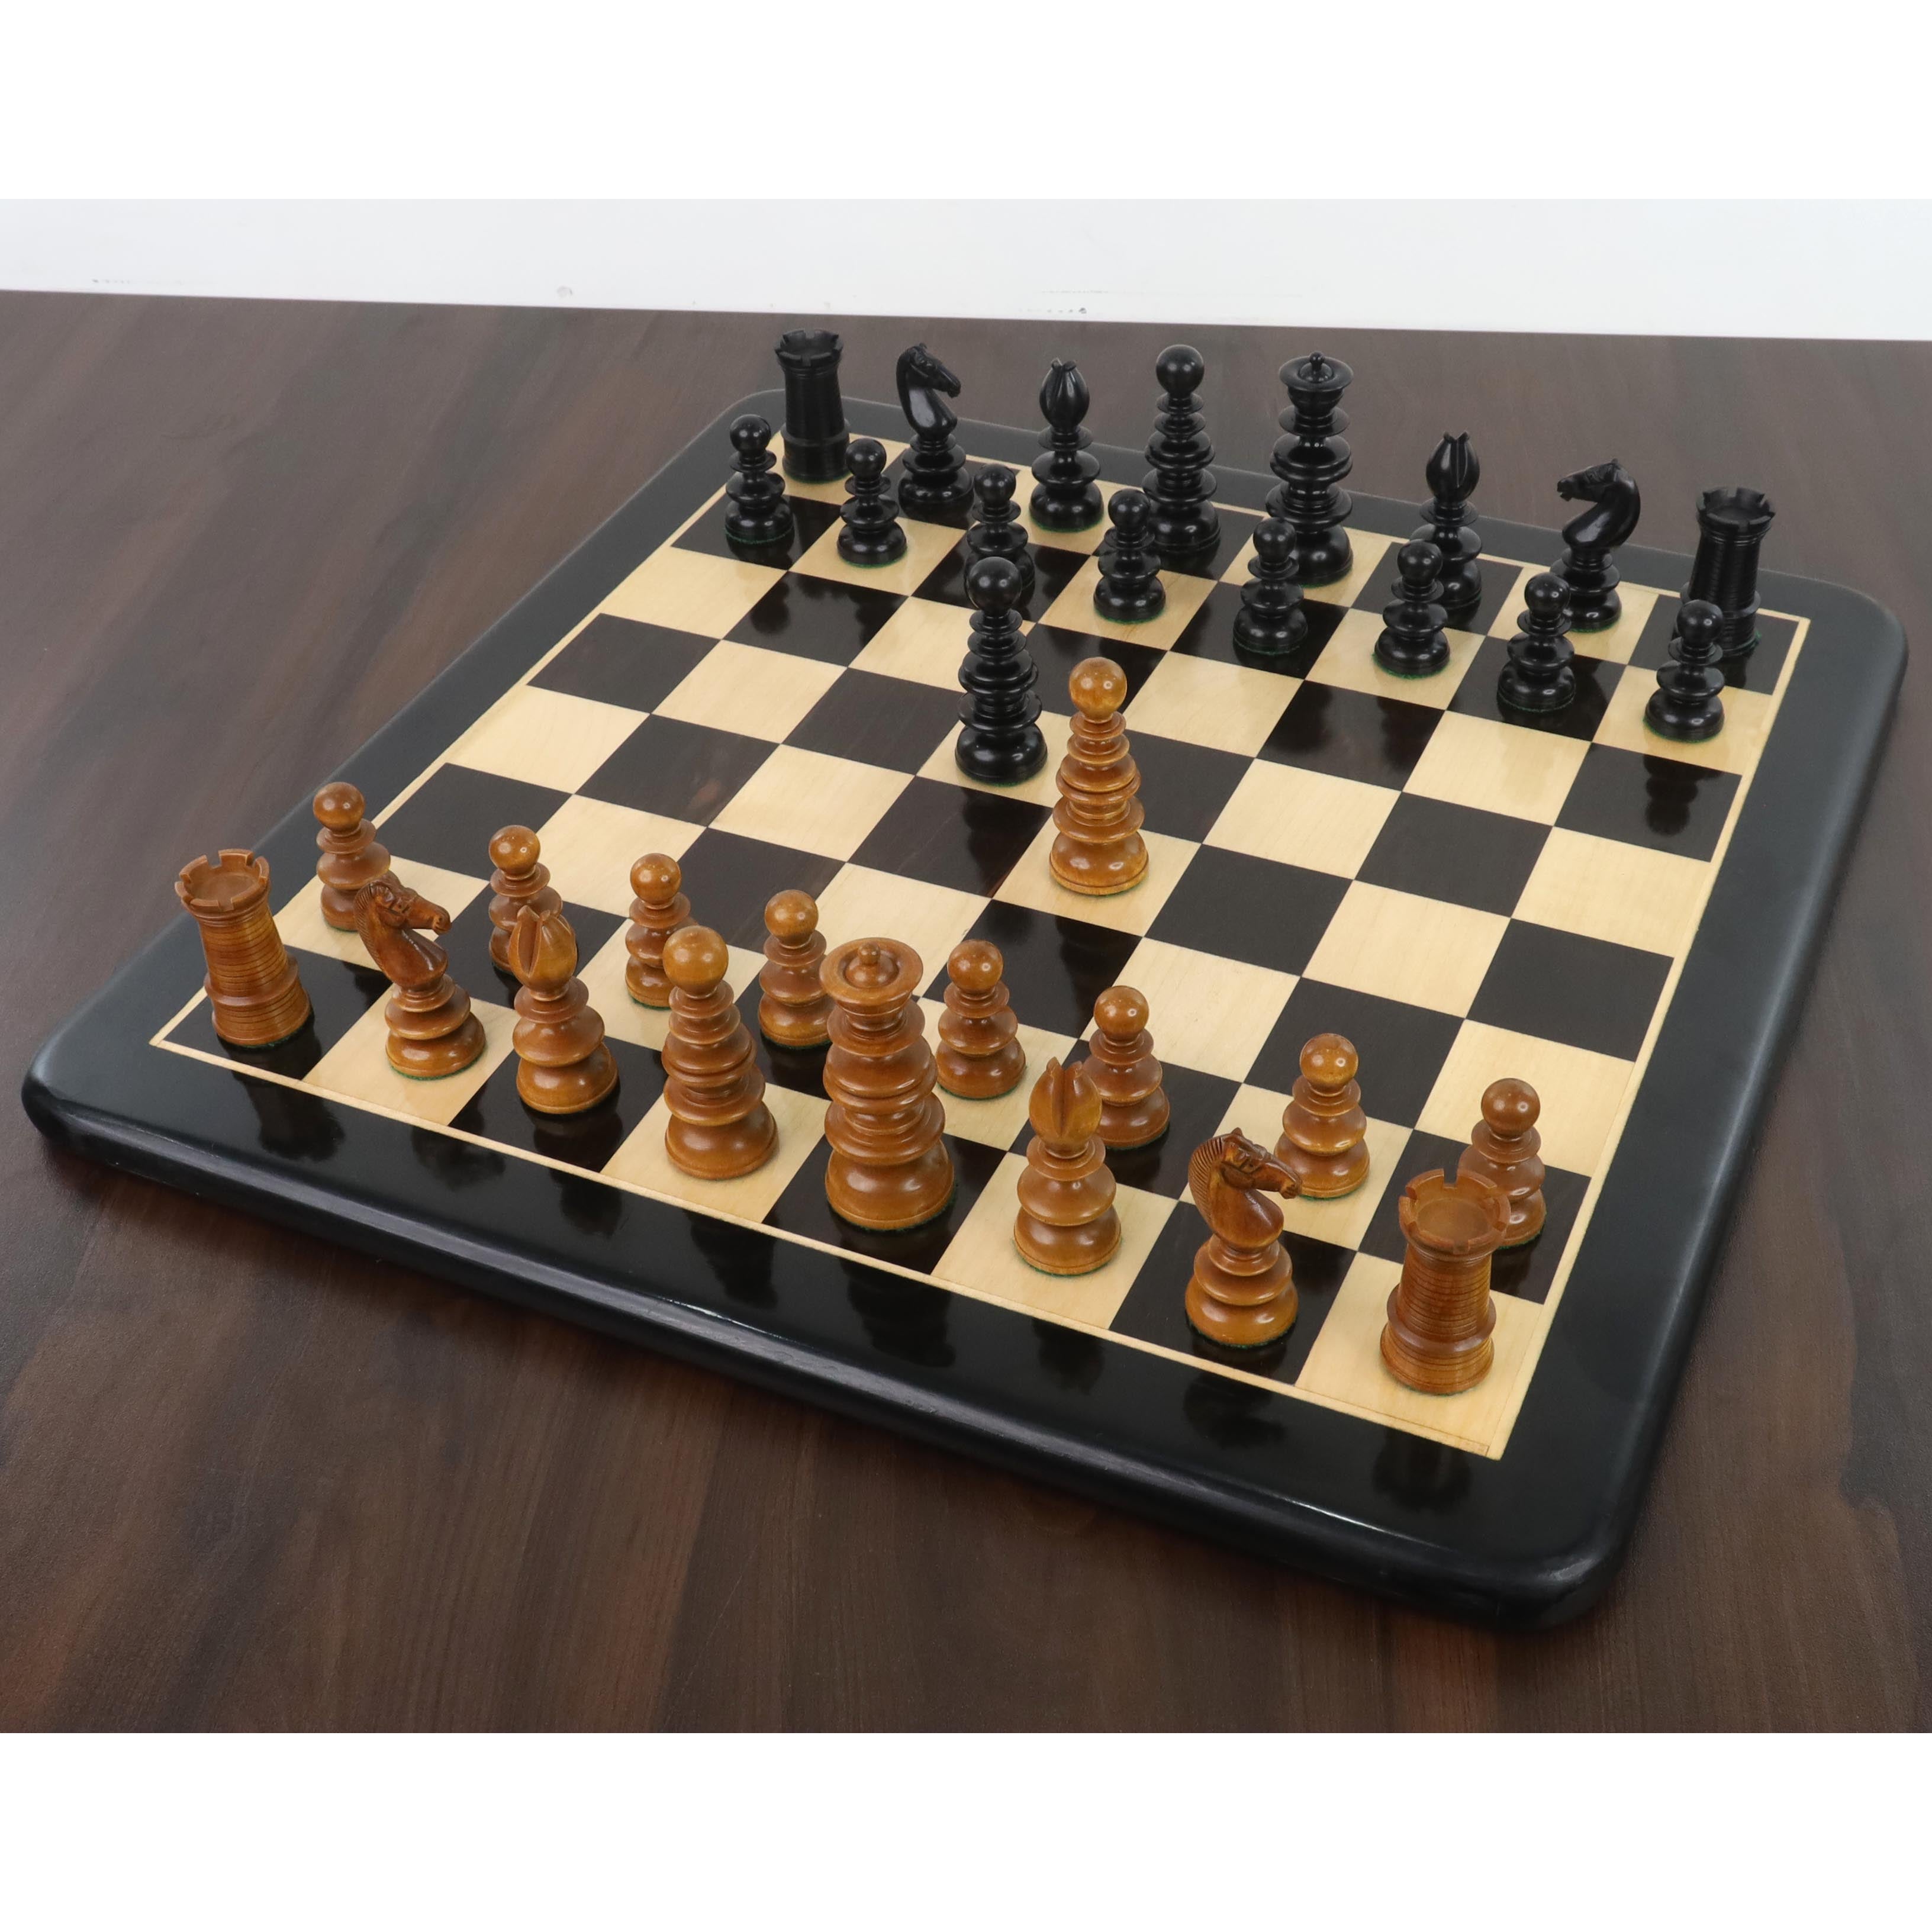 3.3" St. John Pre-Staunton Calvert Chess Pieces Only set - Ebony Wood & Antique